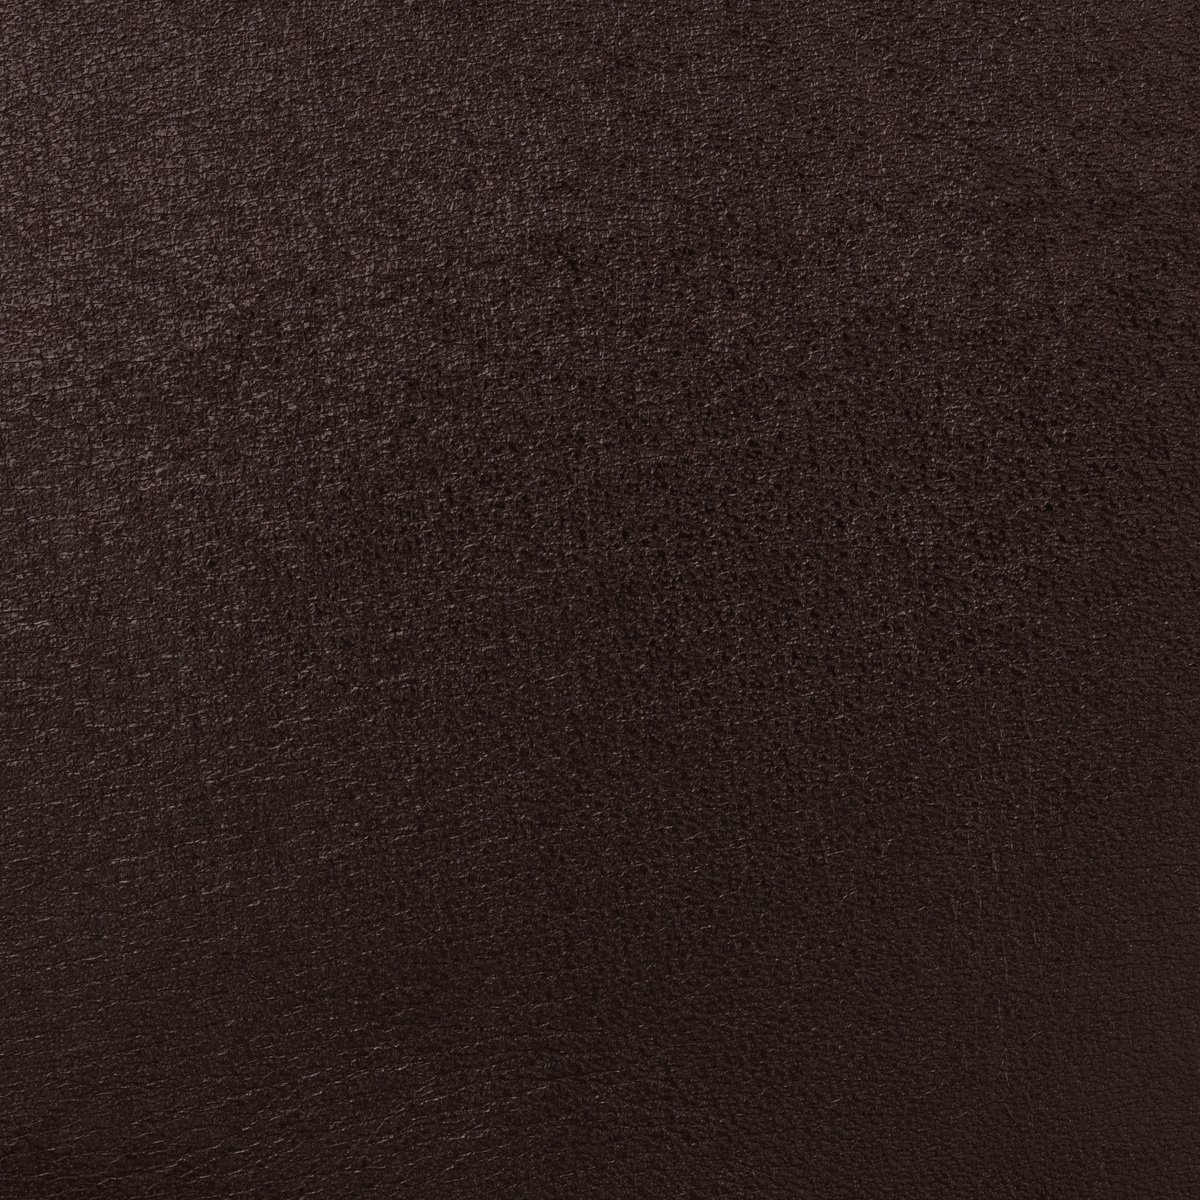 J.FitzPatrick Footwear Chocolate Calf Leather